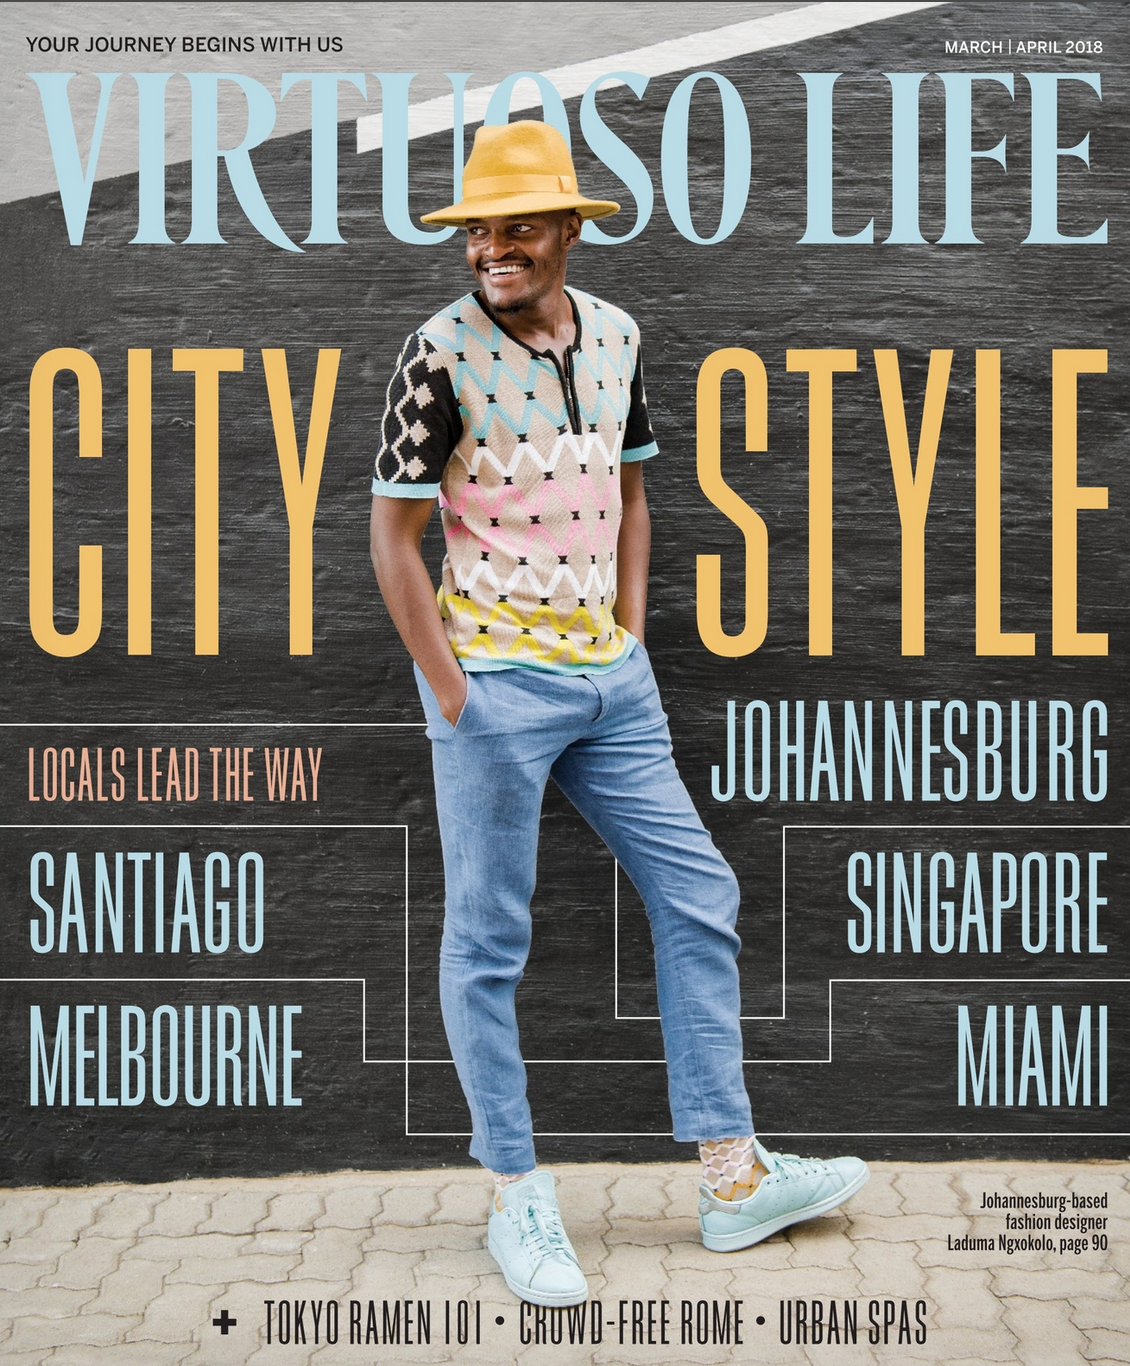 Virtuoso Life: My Town – Johannesburg, Singapore, Melbourne